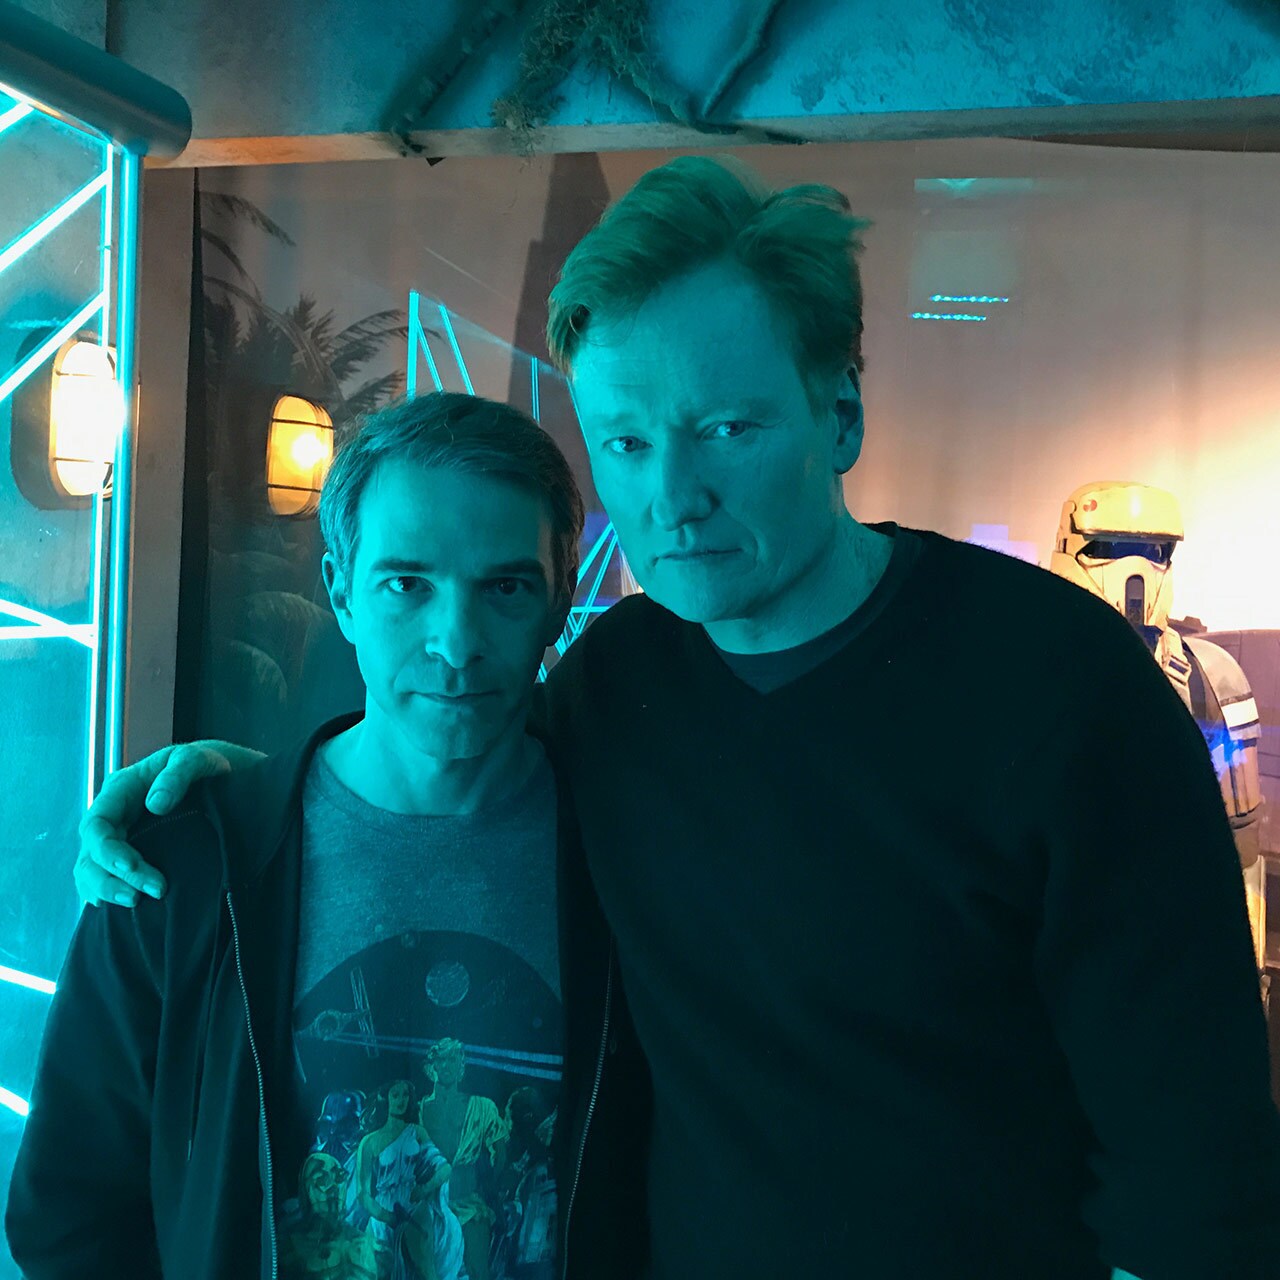 Conan O'Brien stands with his arm around TV producer Jordan Schlansky.